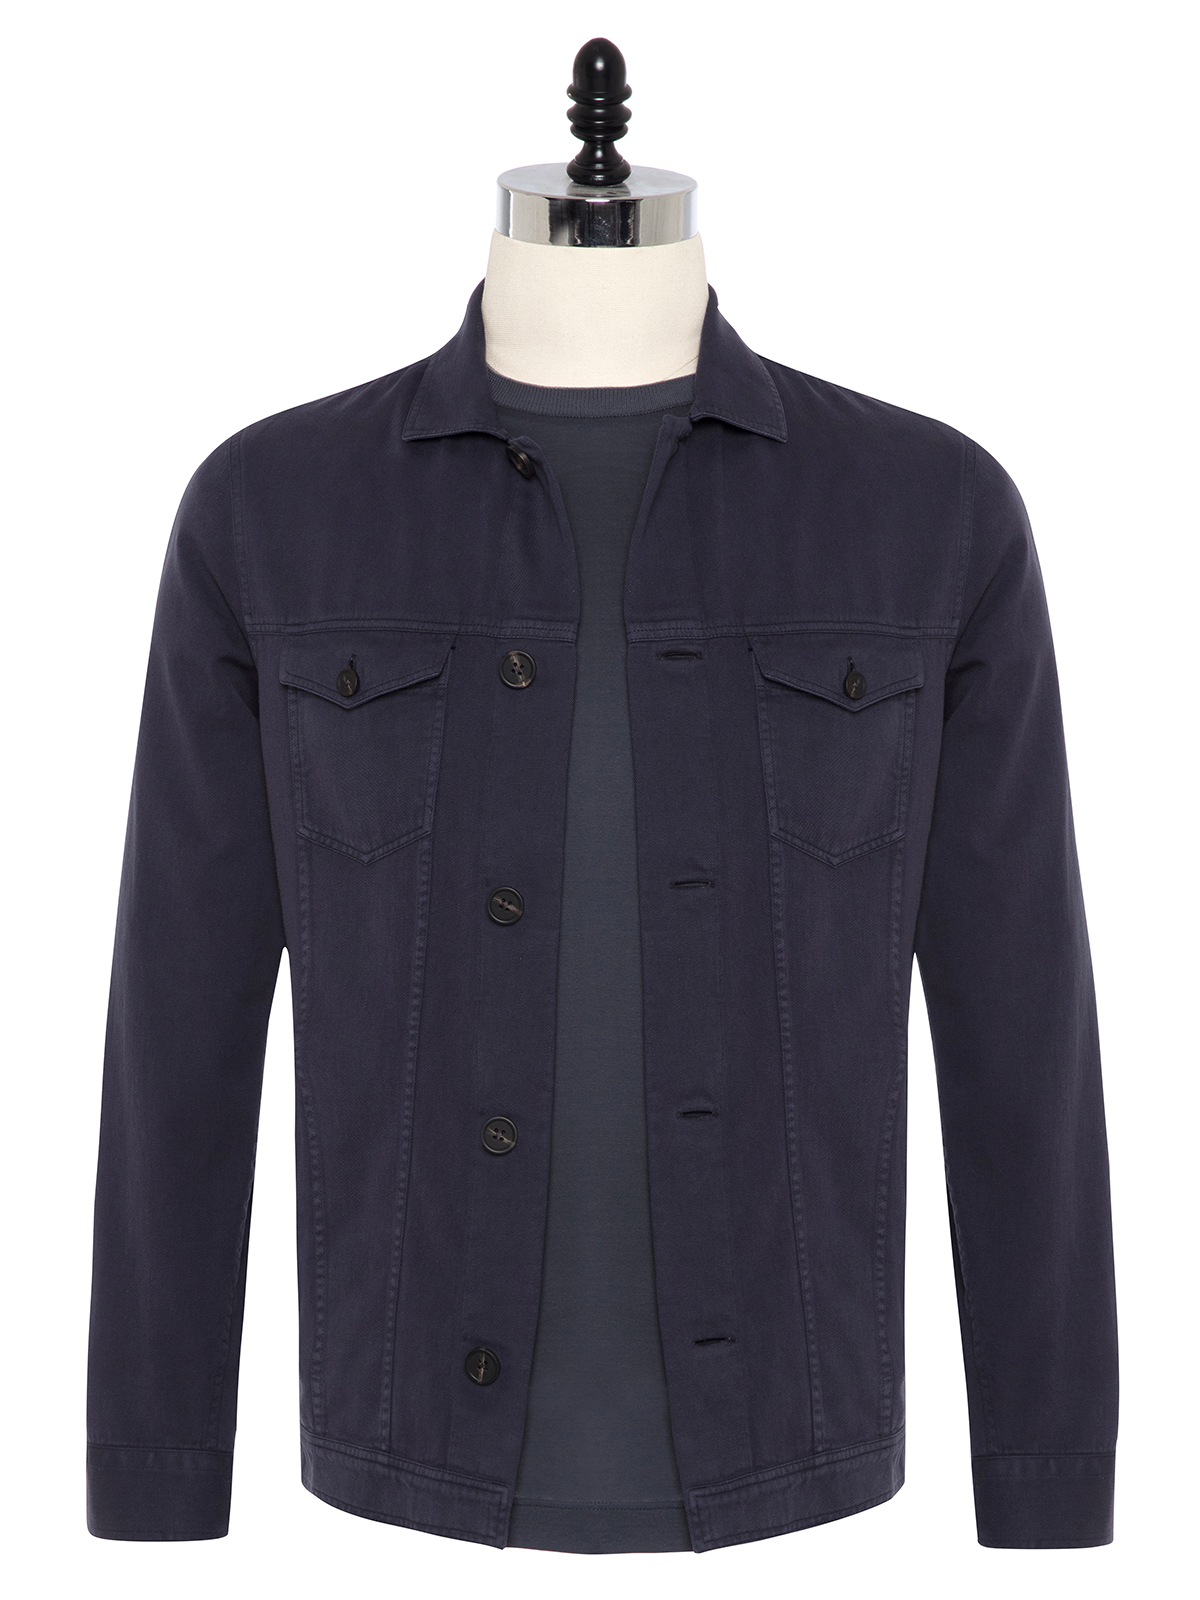 Germirli - Germirli İndigo Mavi Twill Yandan Cepli Vintage Tailor Fit Ceket Gömlek